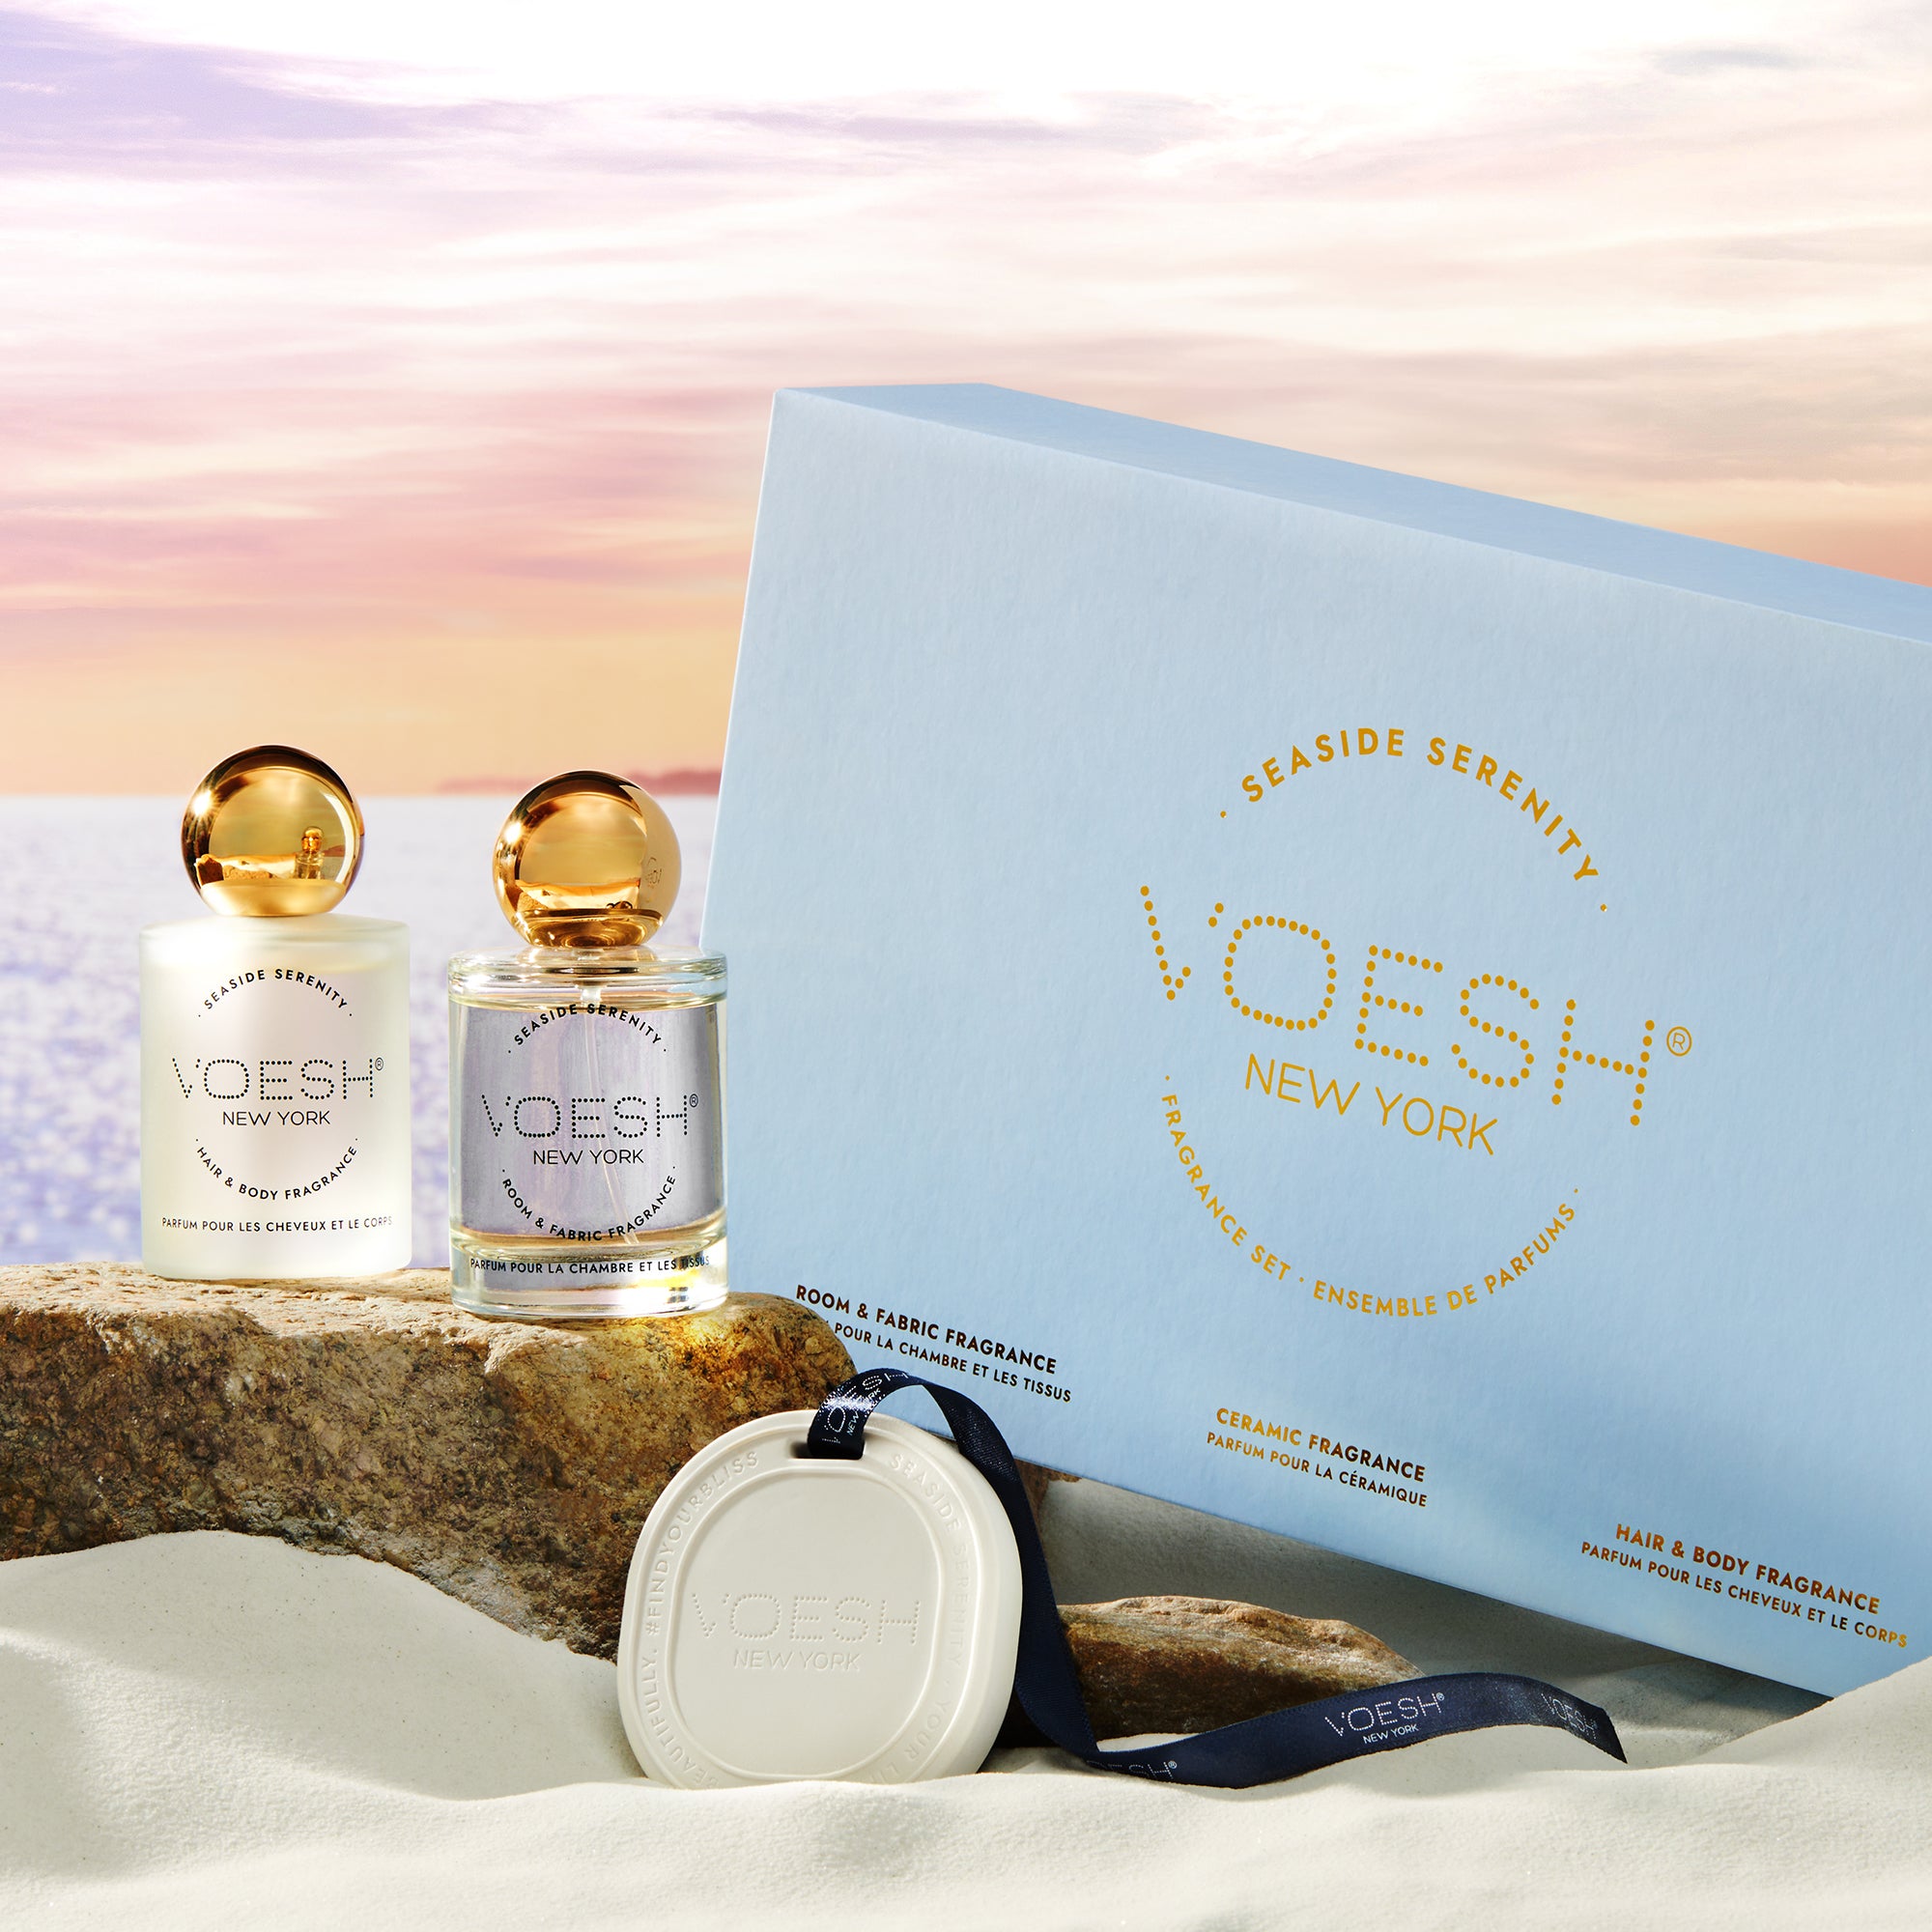 Seaside Serenity Fragrance Set Box, Ceramic Fragrance, Hair & Body Fragrance, and Room & Fabric Fragrance on a beach background.